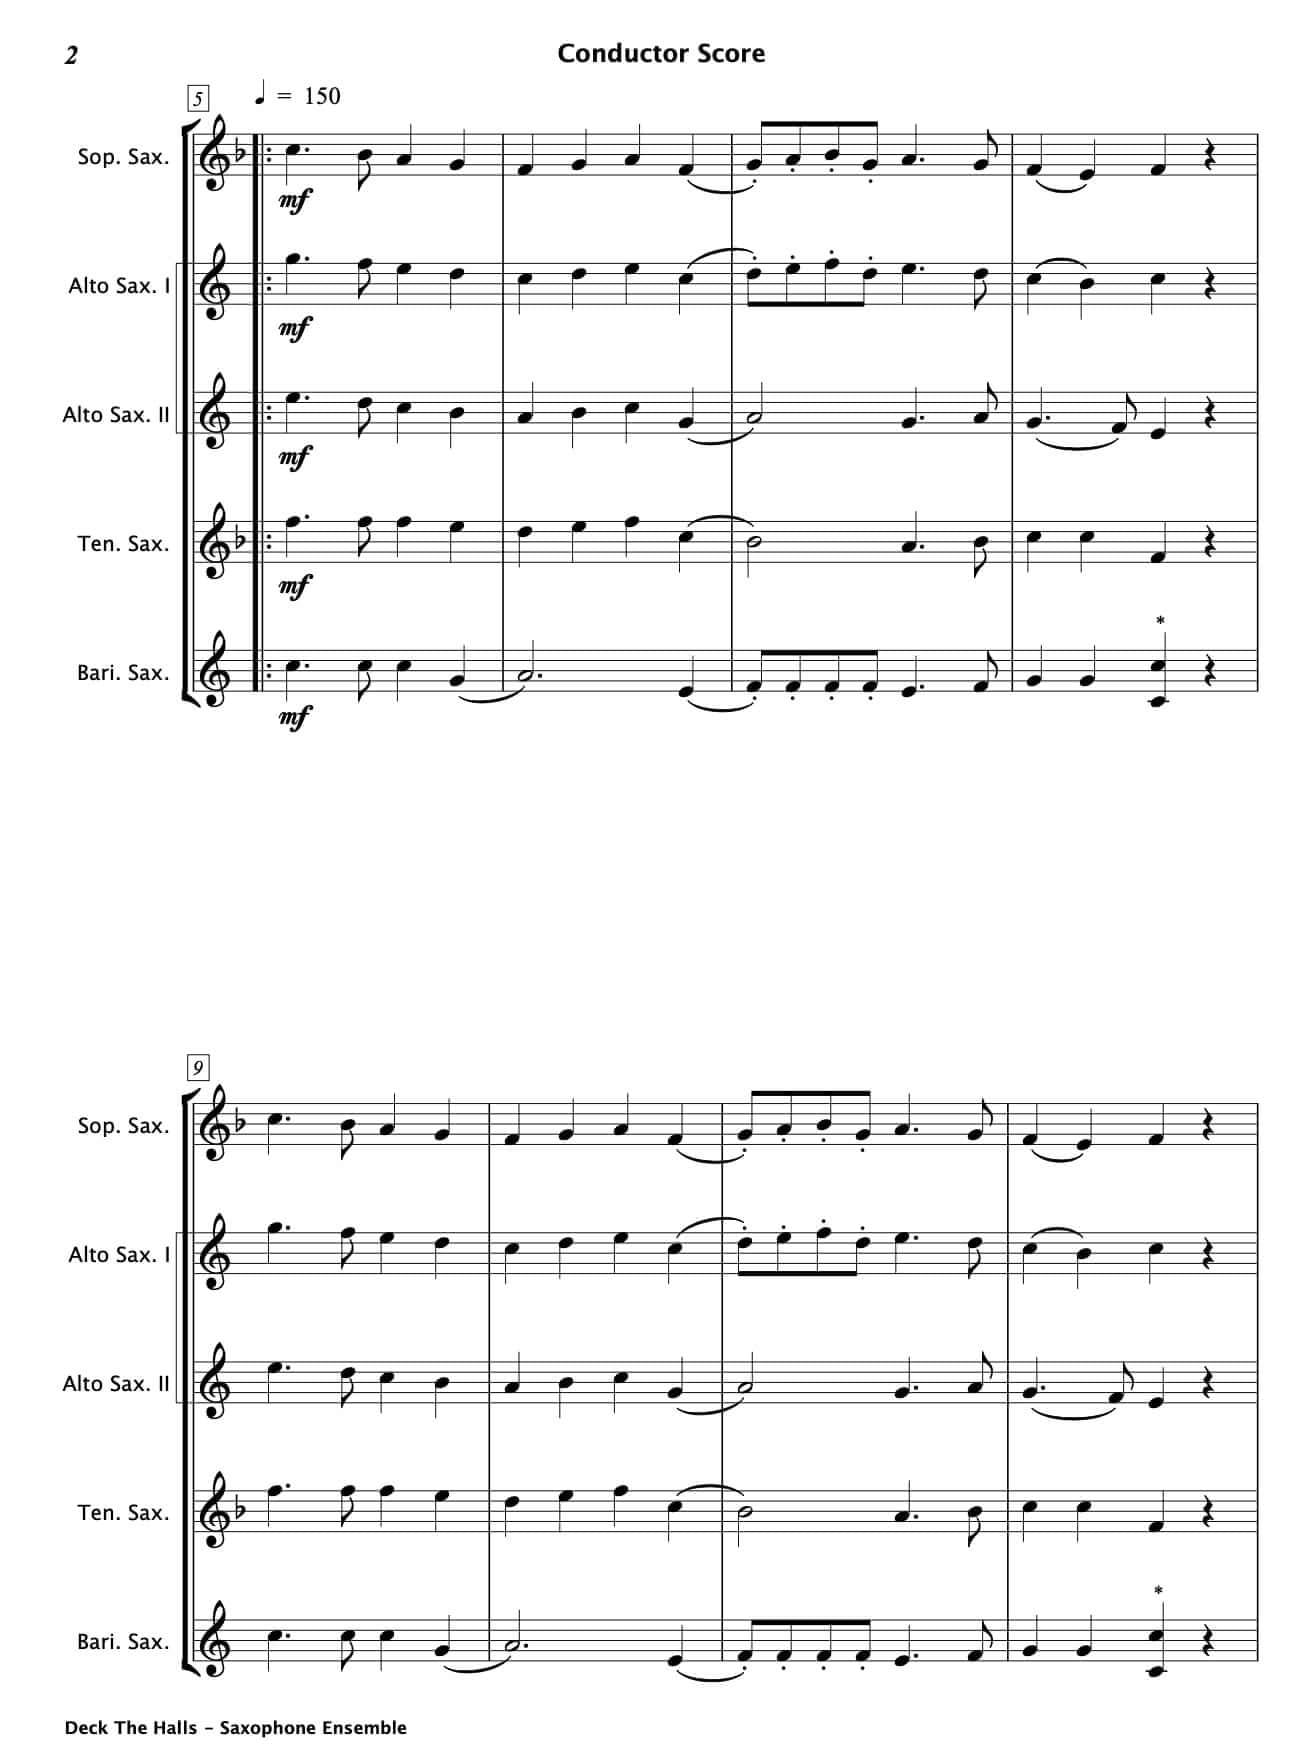 Christmas Saxophone Ensembles - Book 1 - Paul Barker Music 